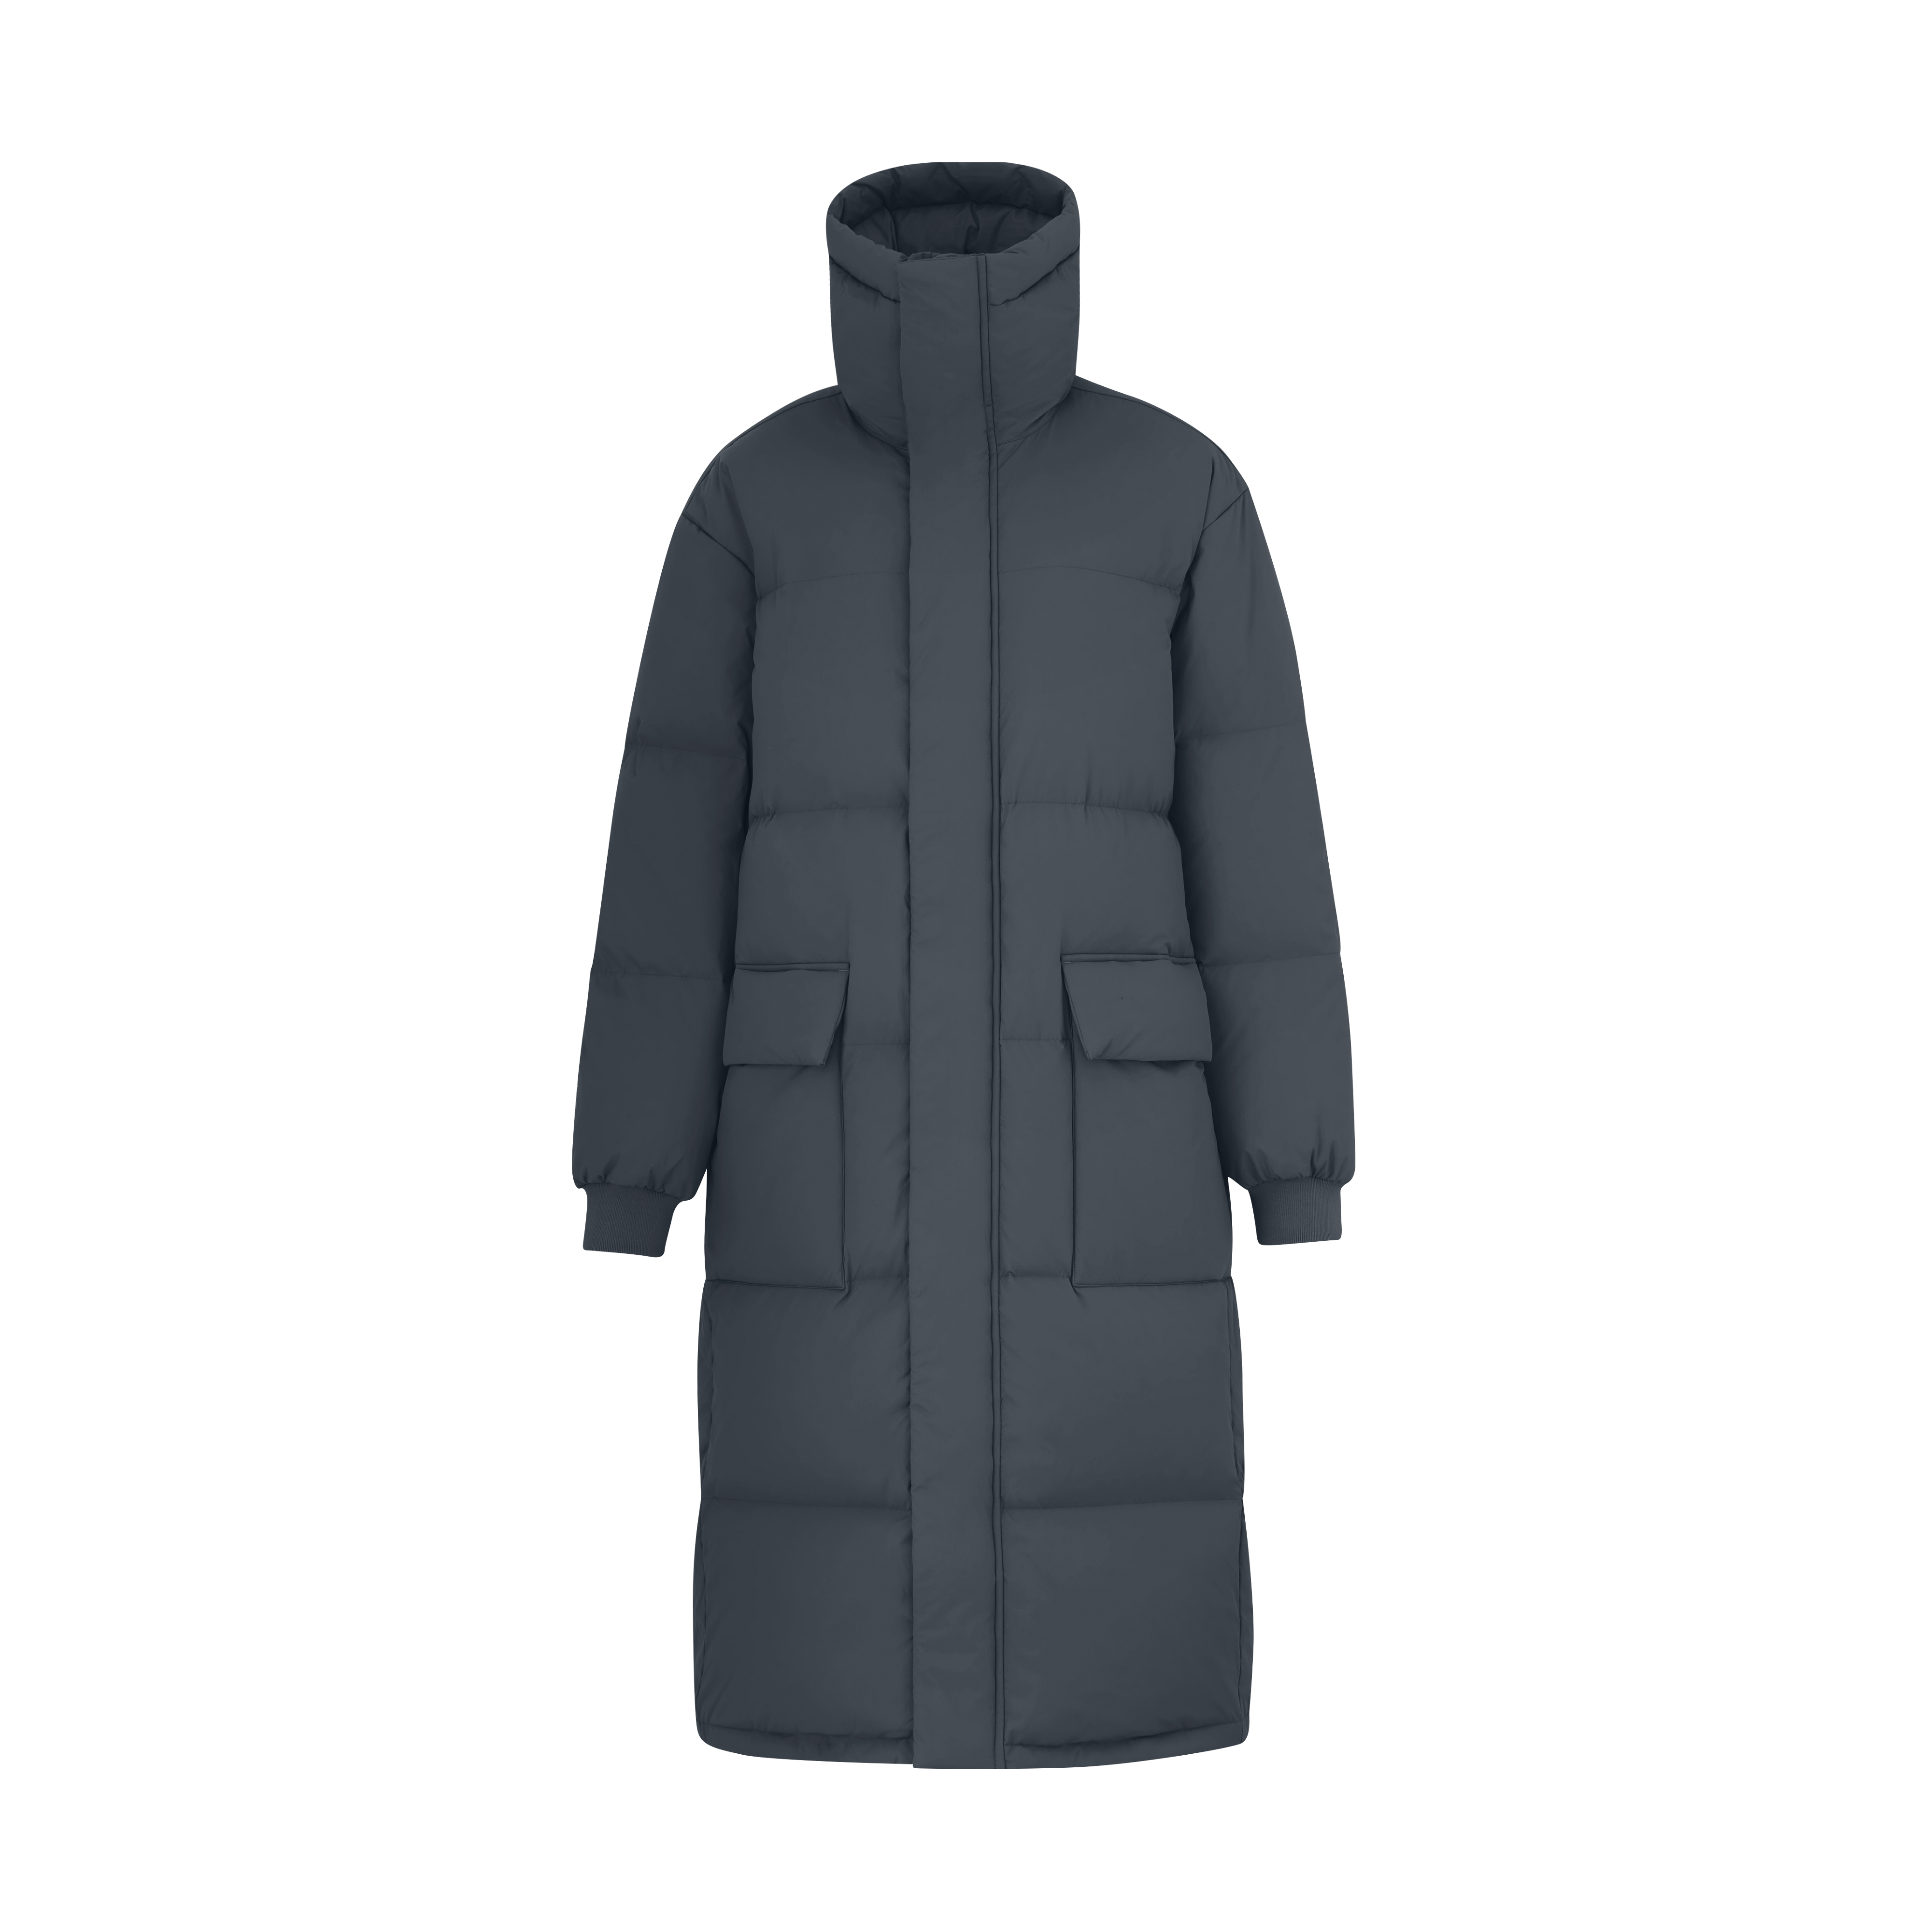 66 North Women's Askja Jackets & Coats